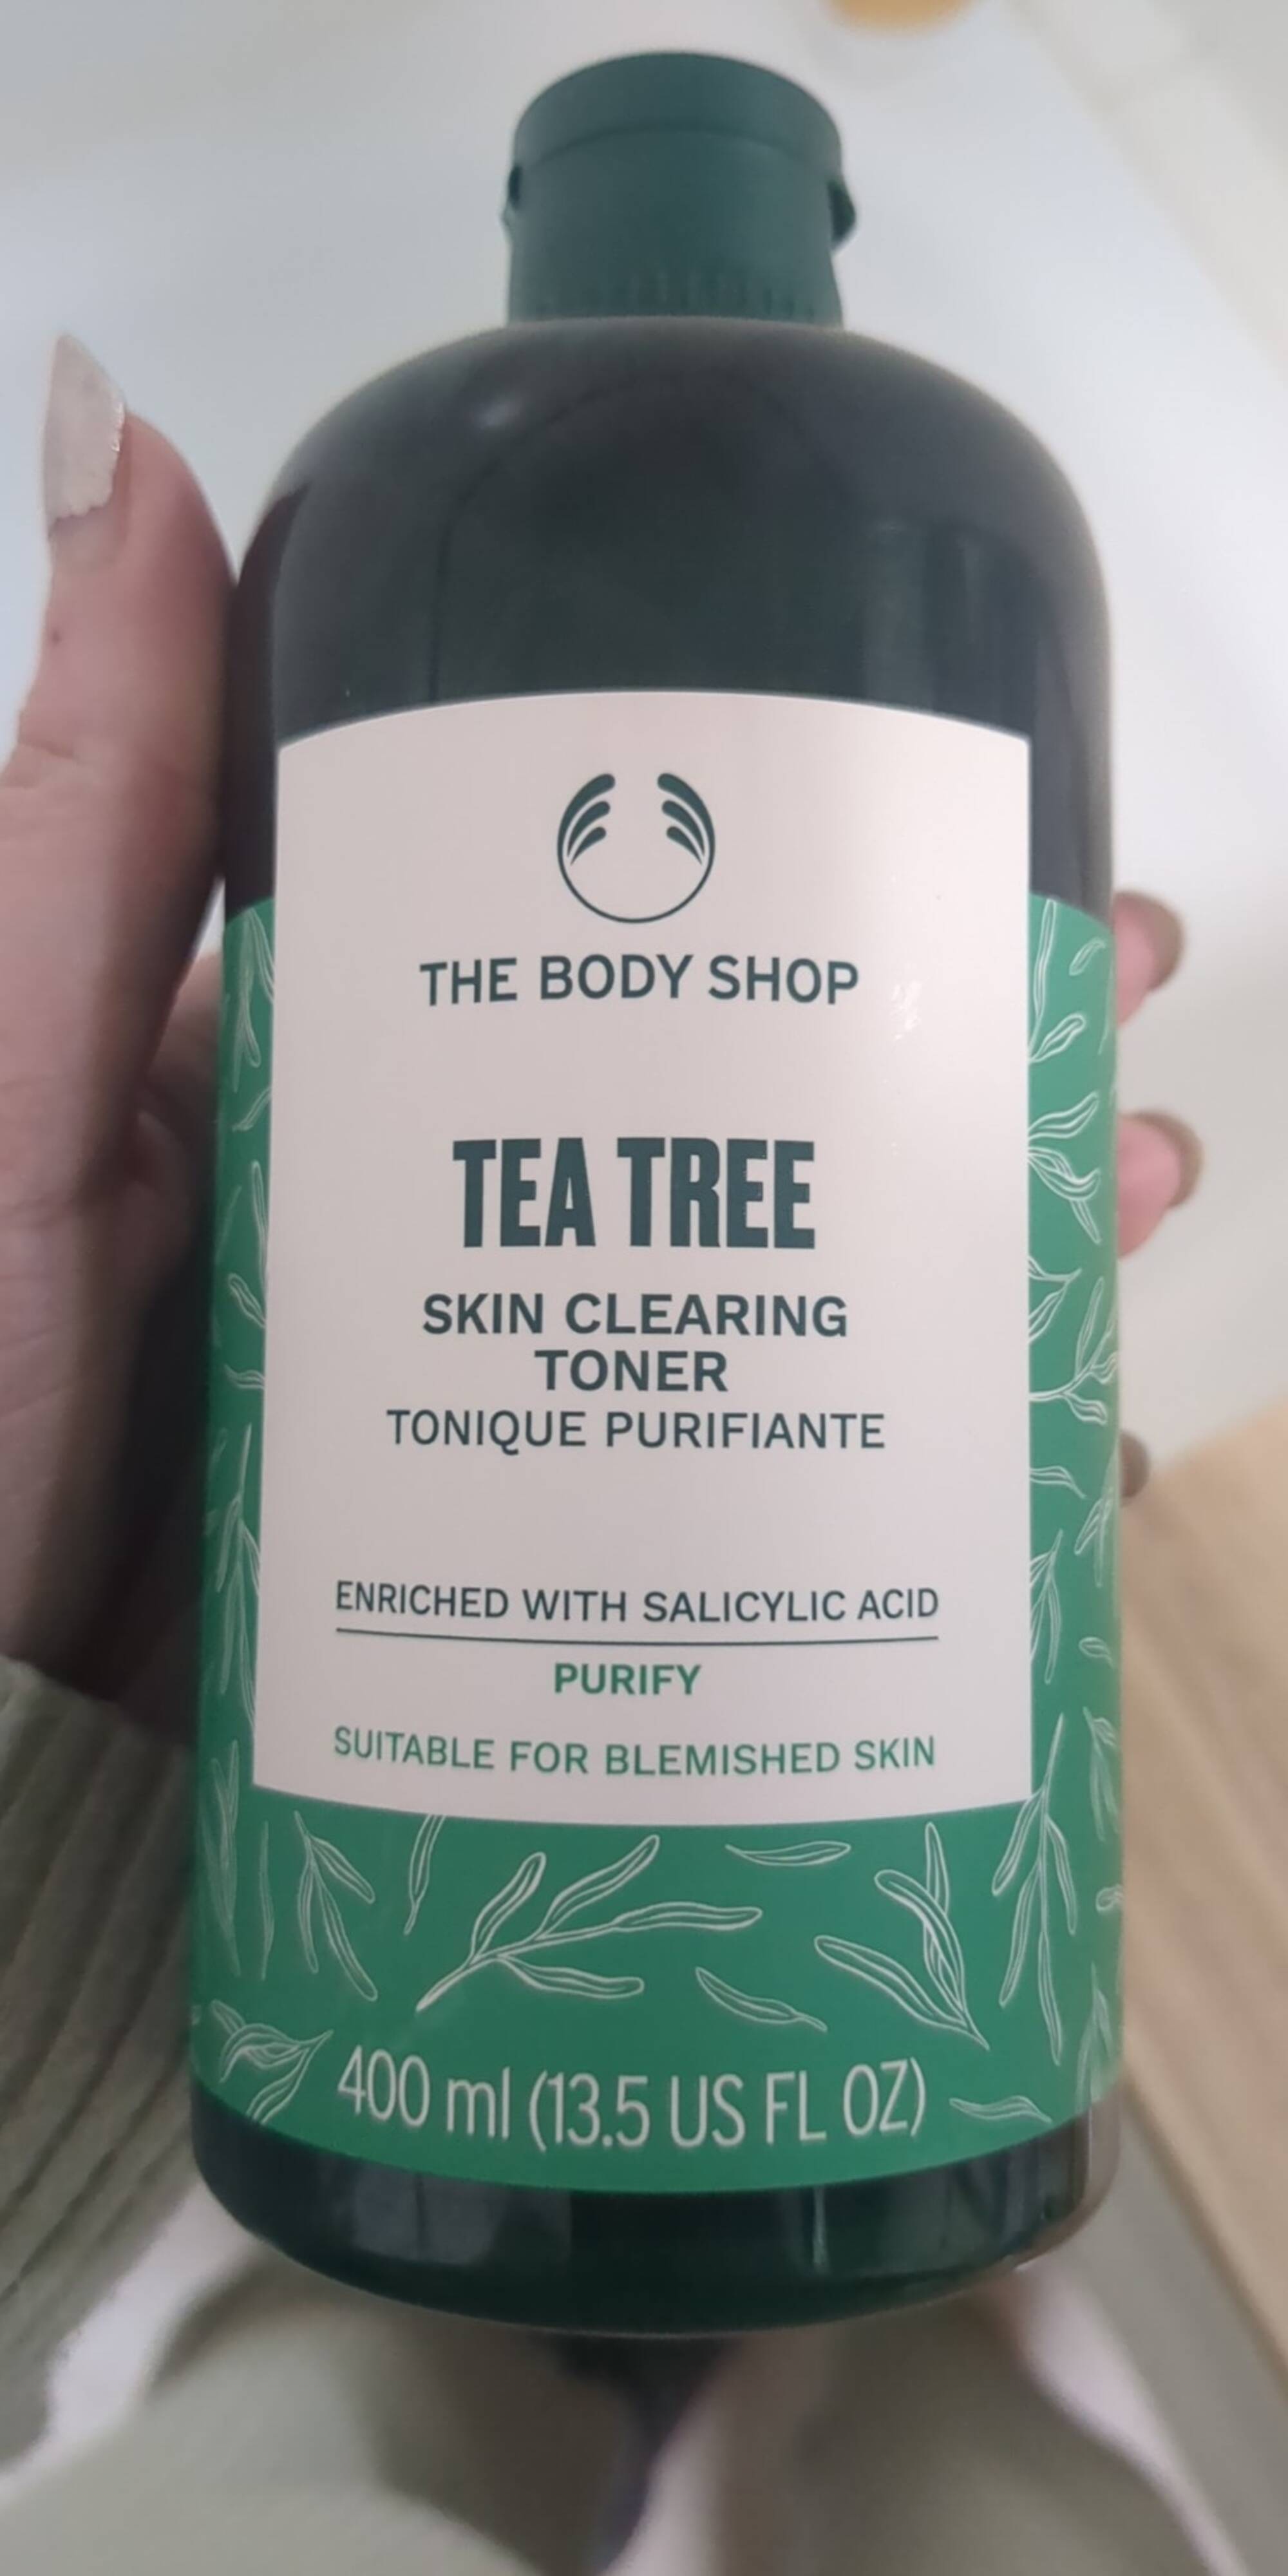 THE BODY SHOP - Tea tree - Tonique purifiante